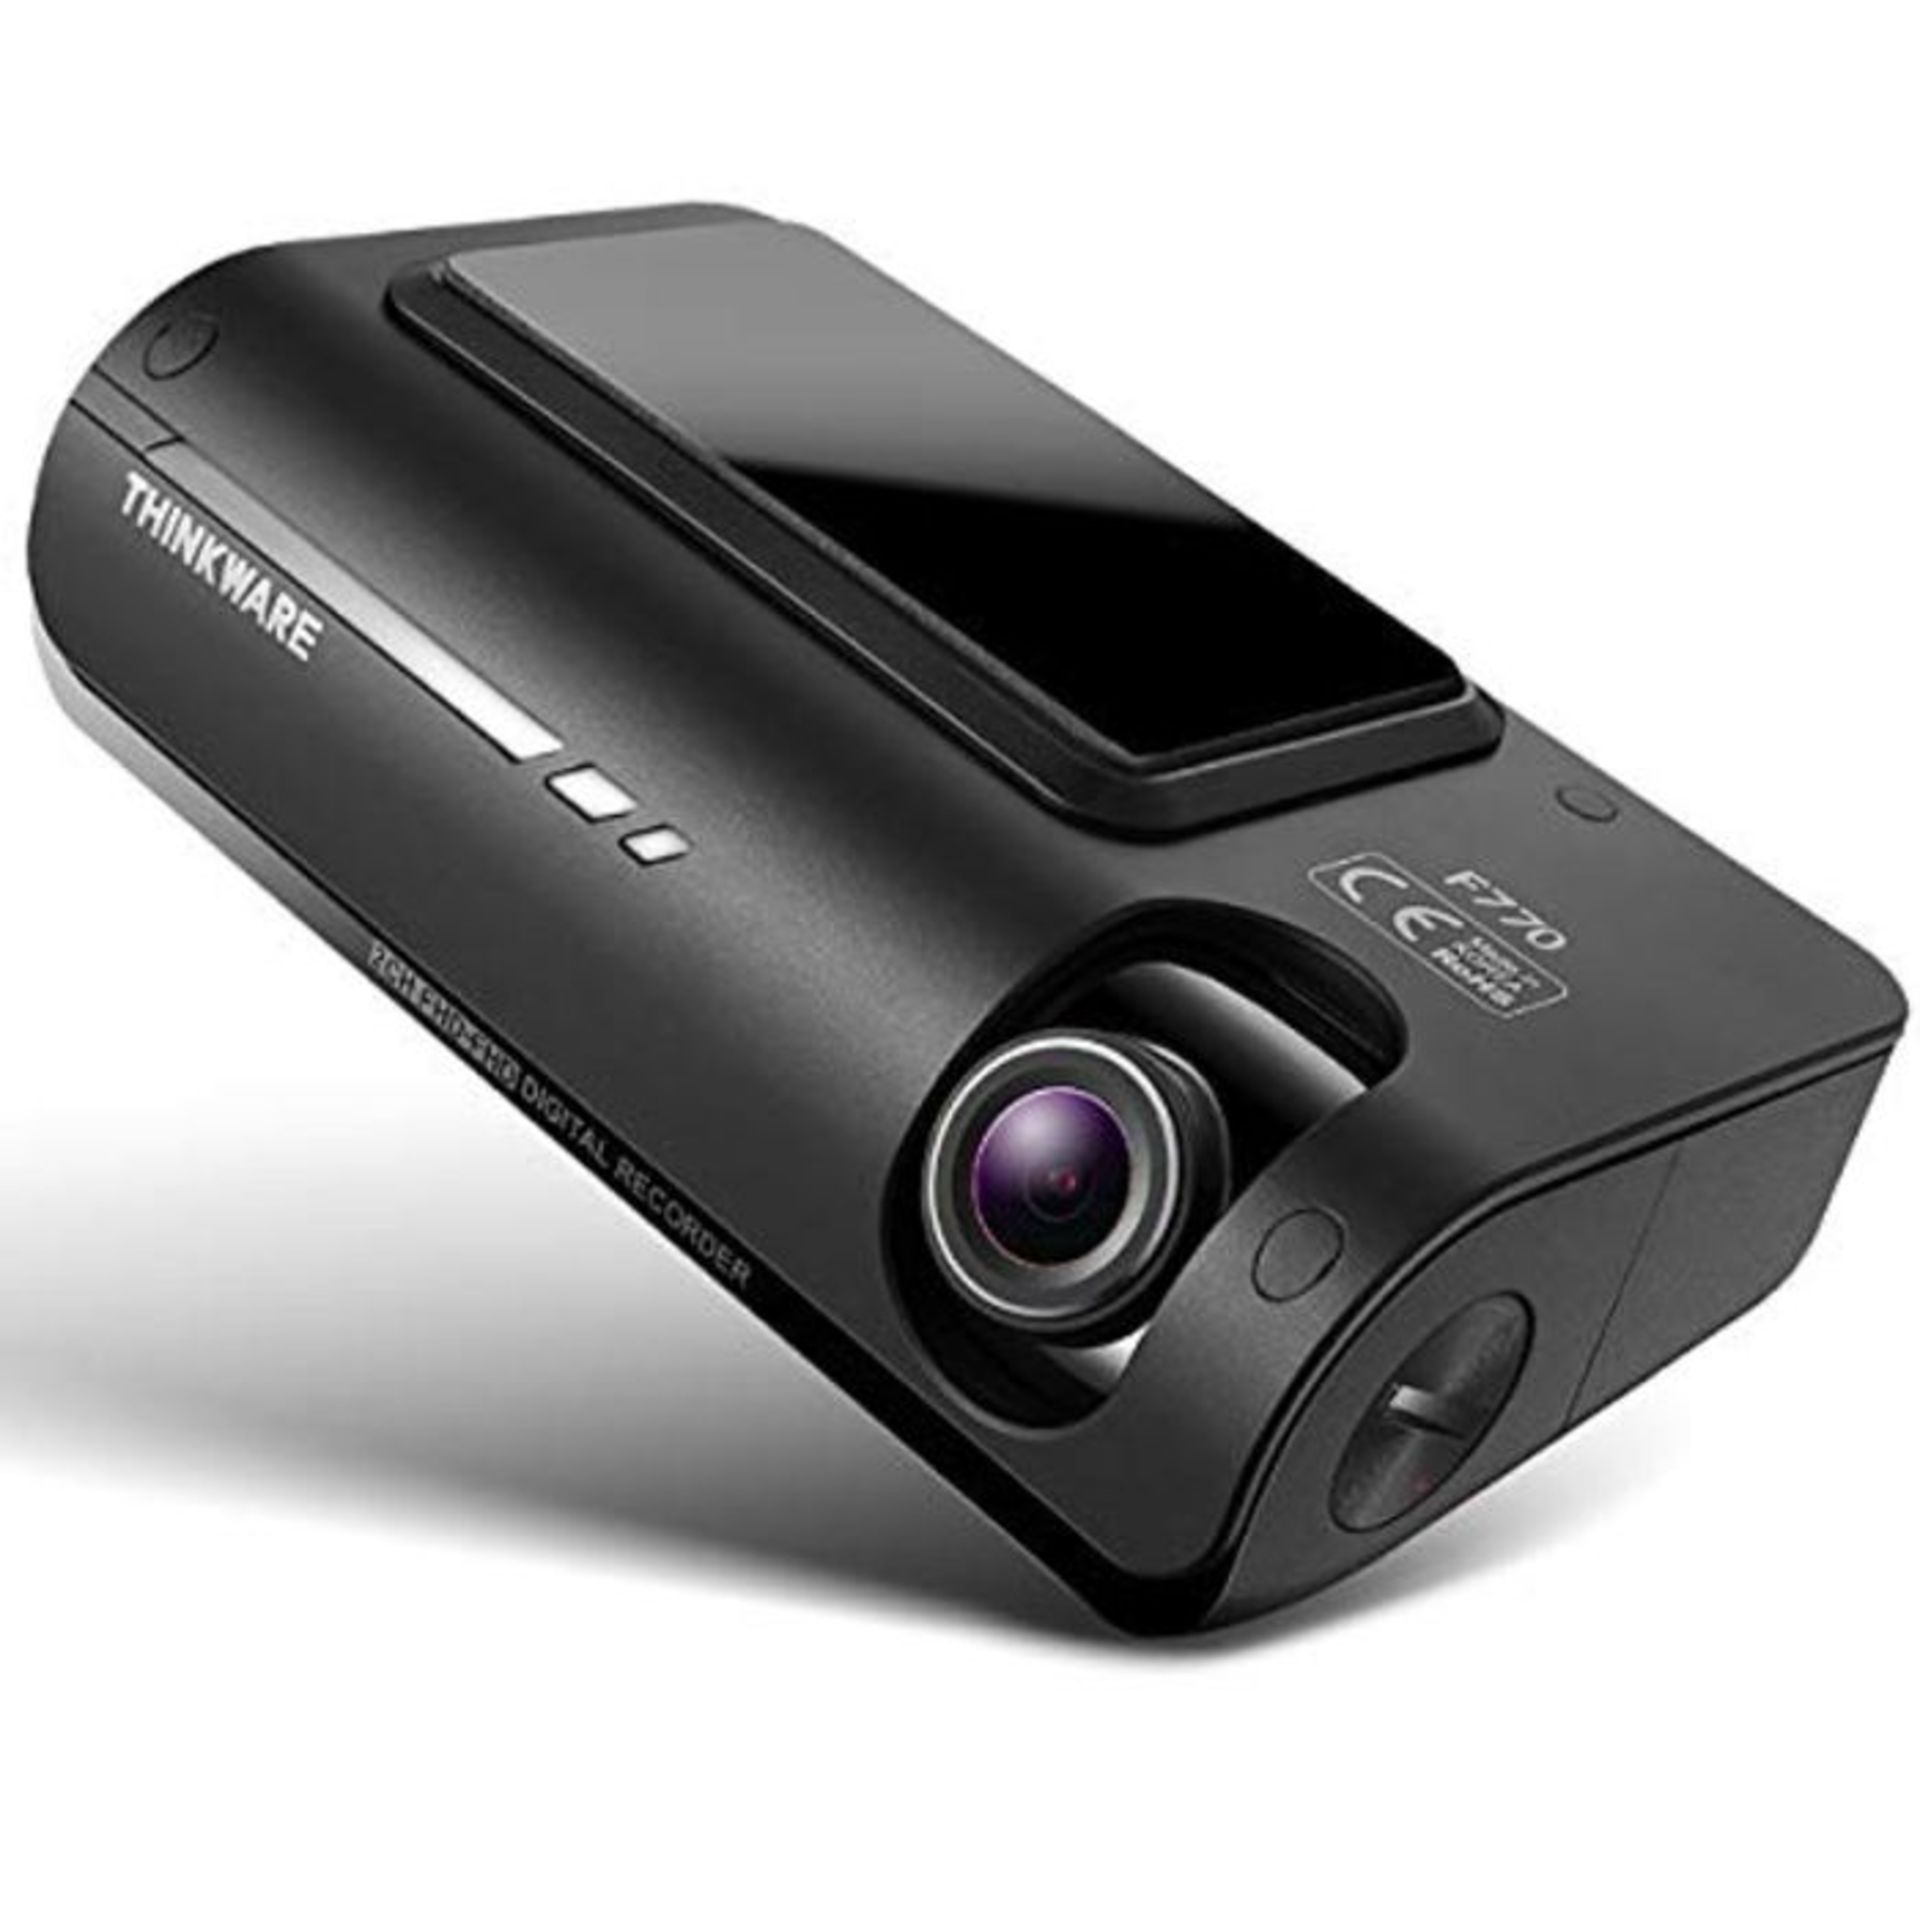 RRP £189.00 Thinkware F770 Dash Cam Full HD 1080p Front Car Camera Dashcam - Super Night Vision, I